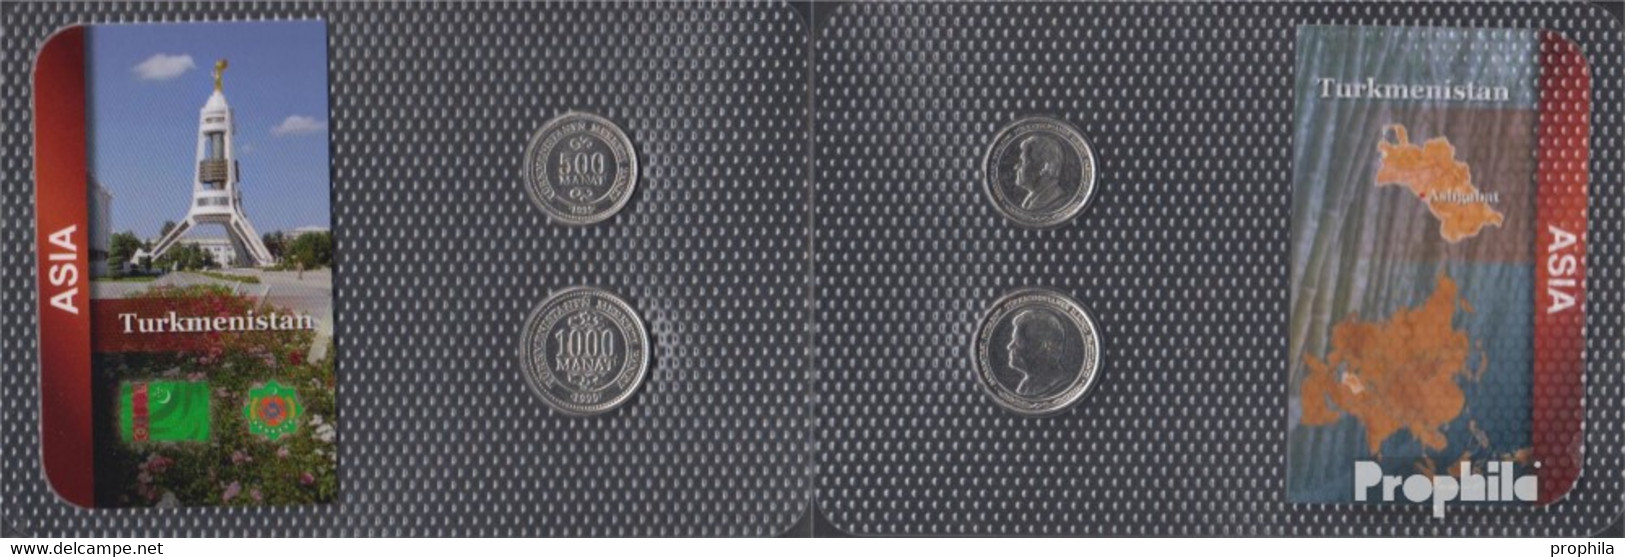 Turkmenistan 1999 Stgl./unzirkuliert Kursmünzen Stgl./unzirkuliert 1999 500 Bis 1.000 Manat - Turkmenistán